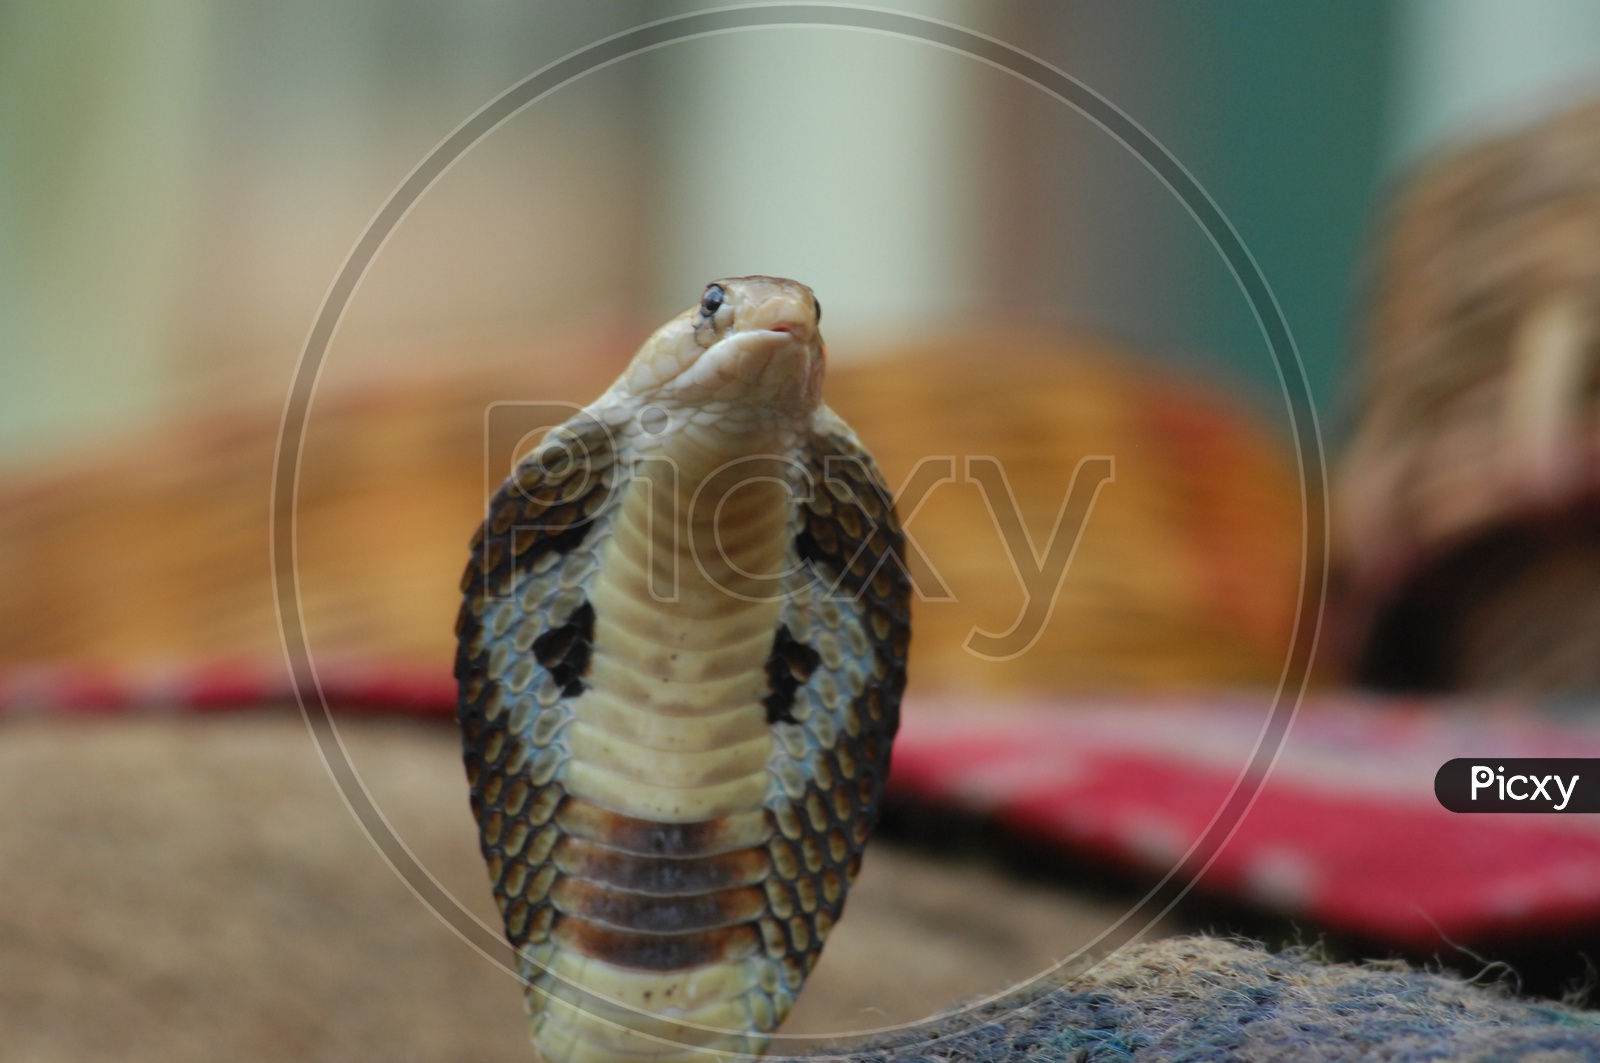 An Indian cobra